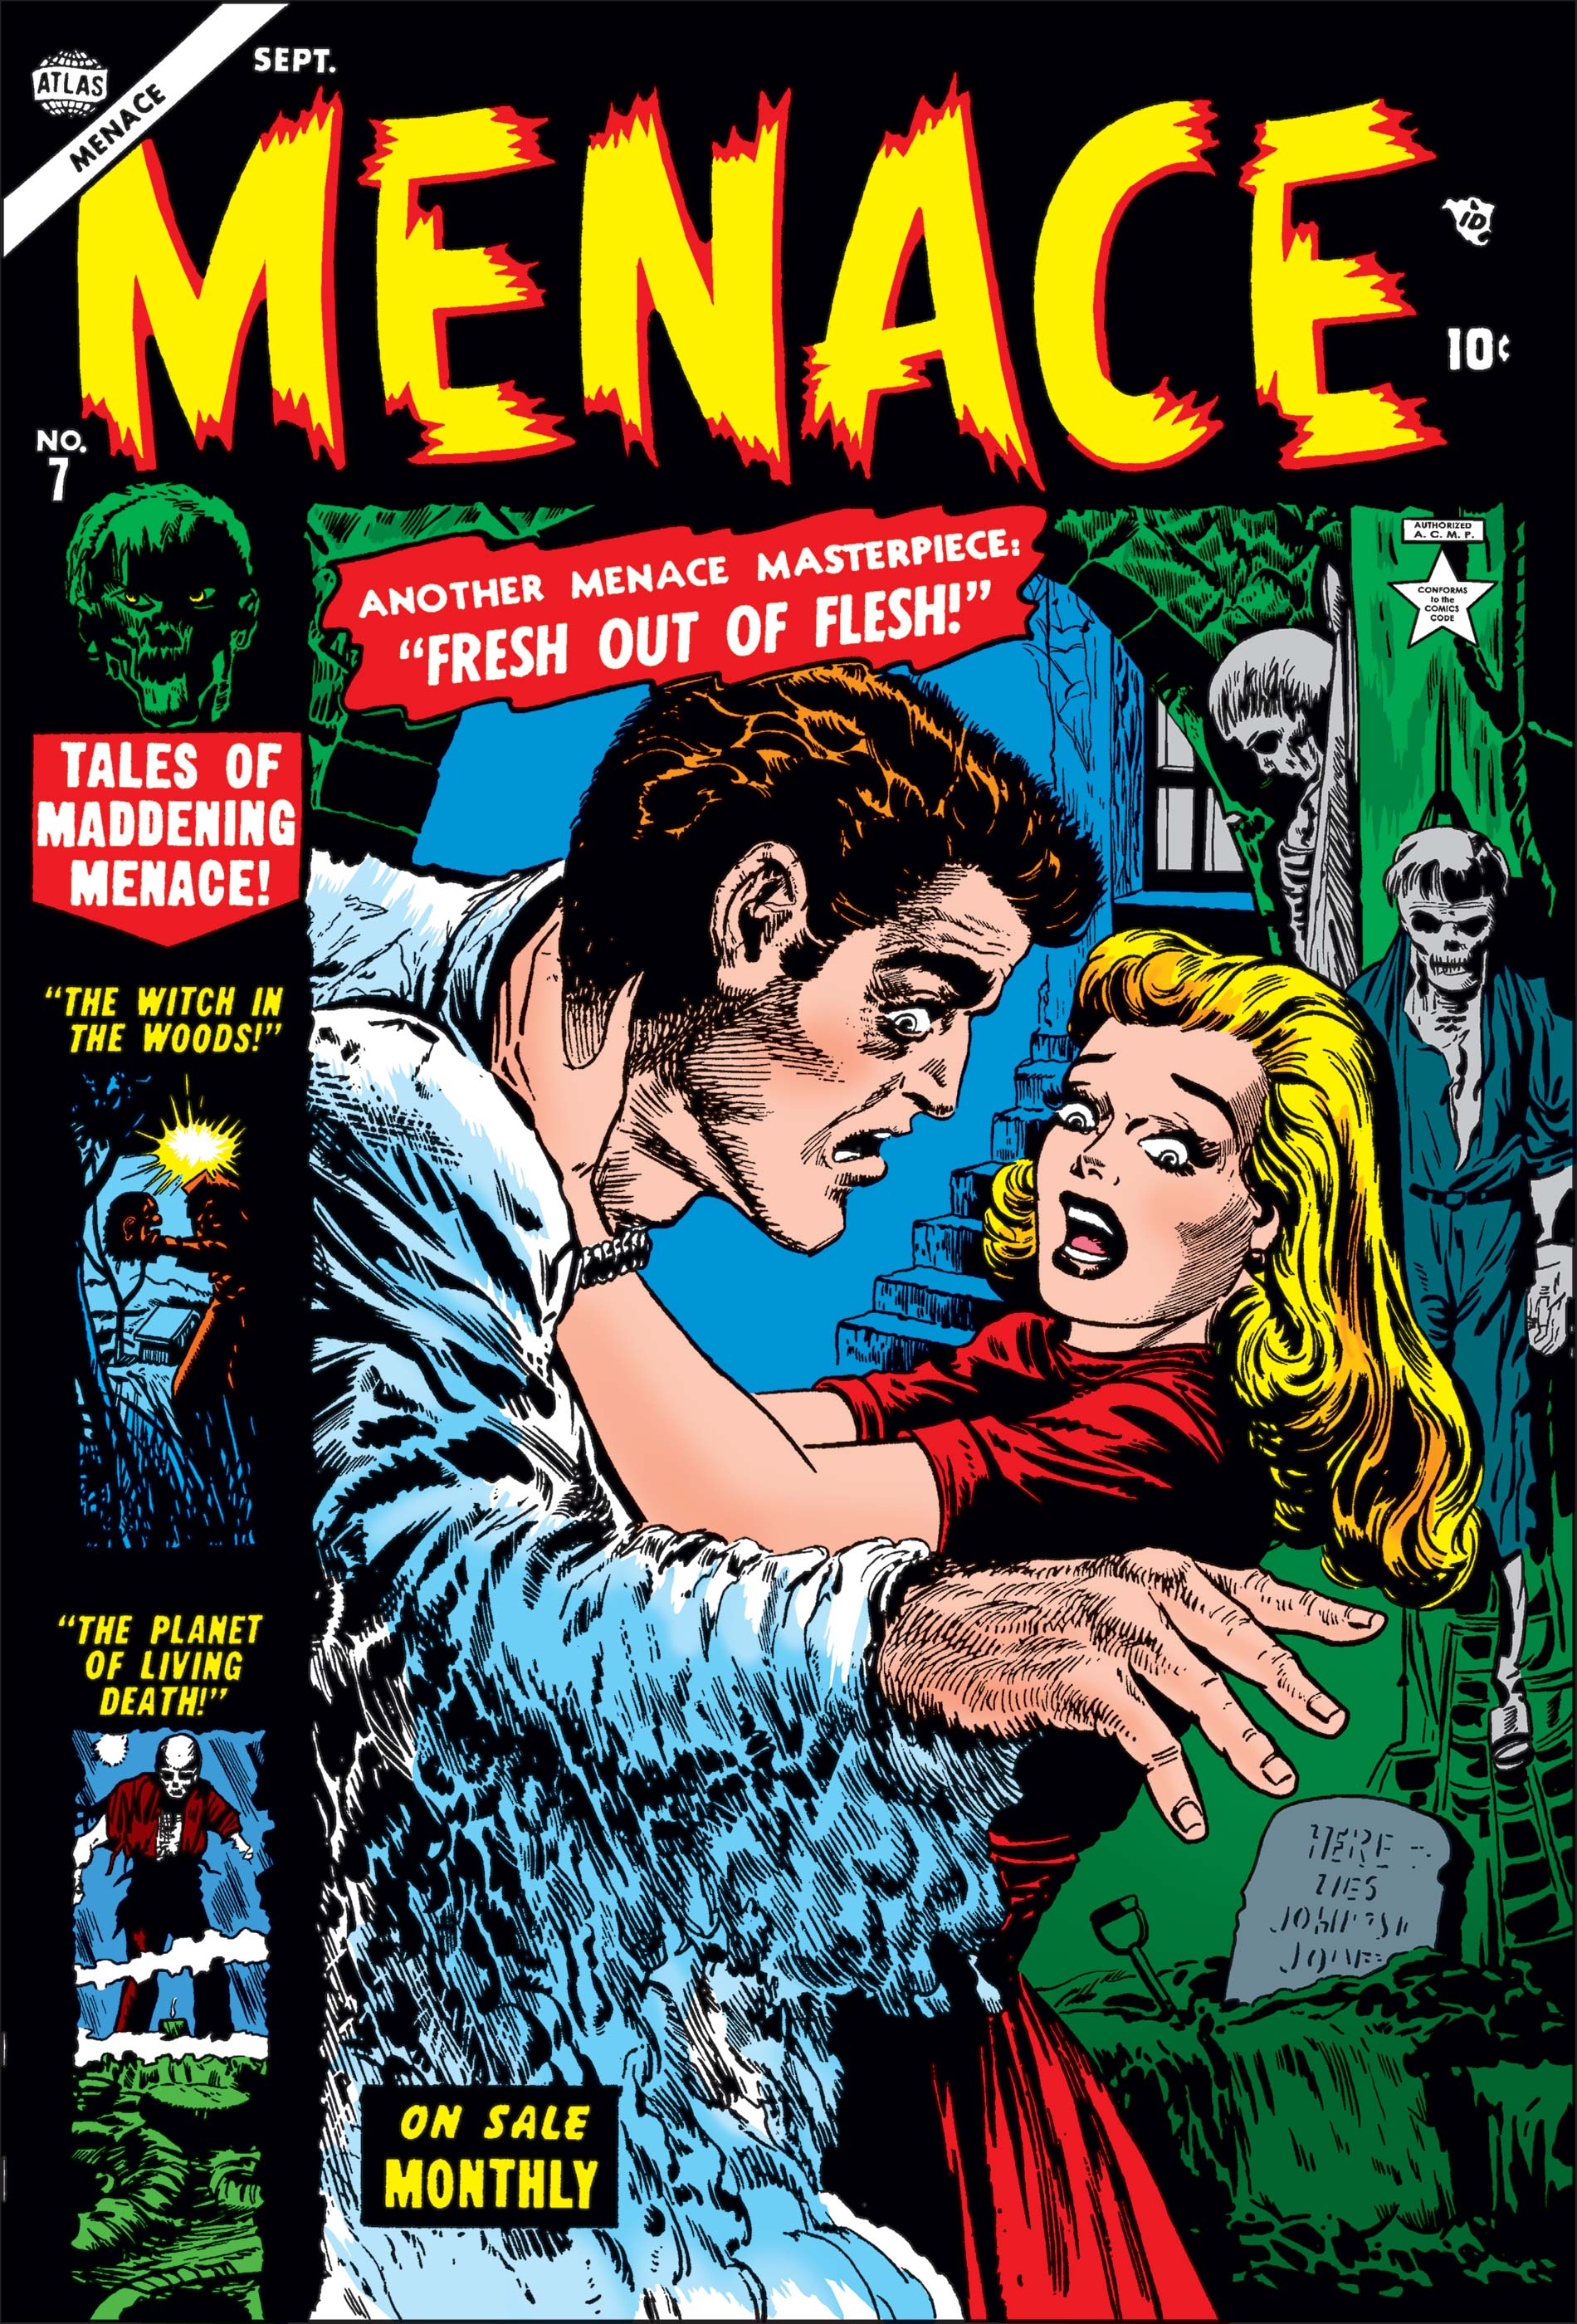 Menace (1953) #7